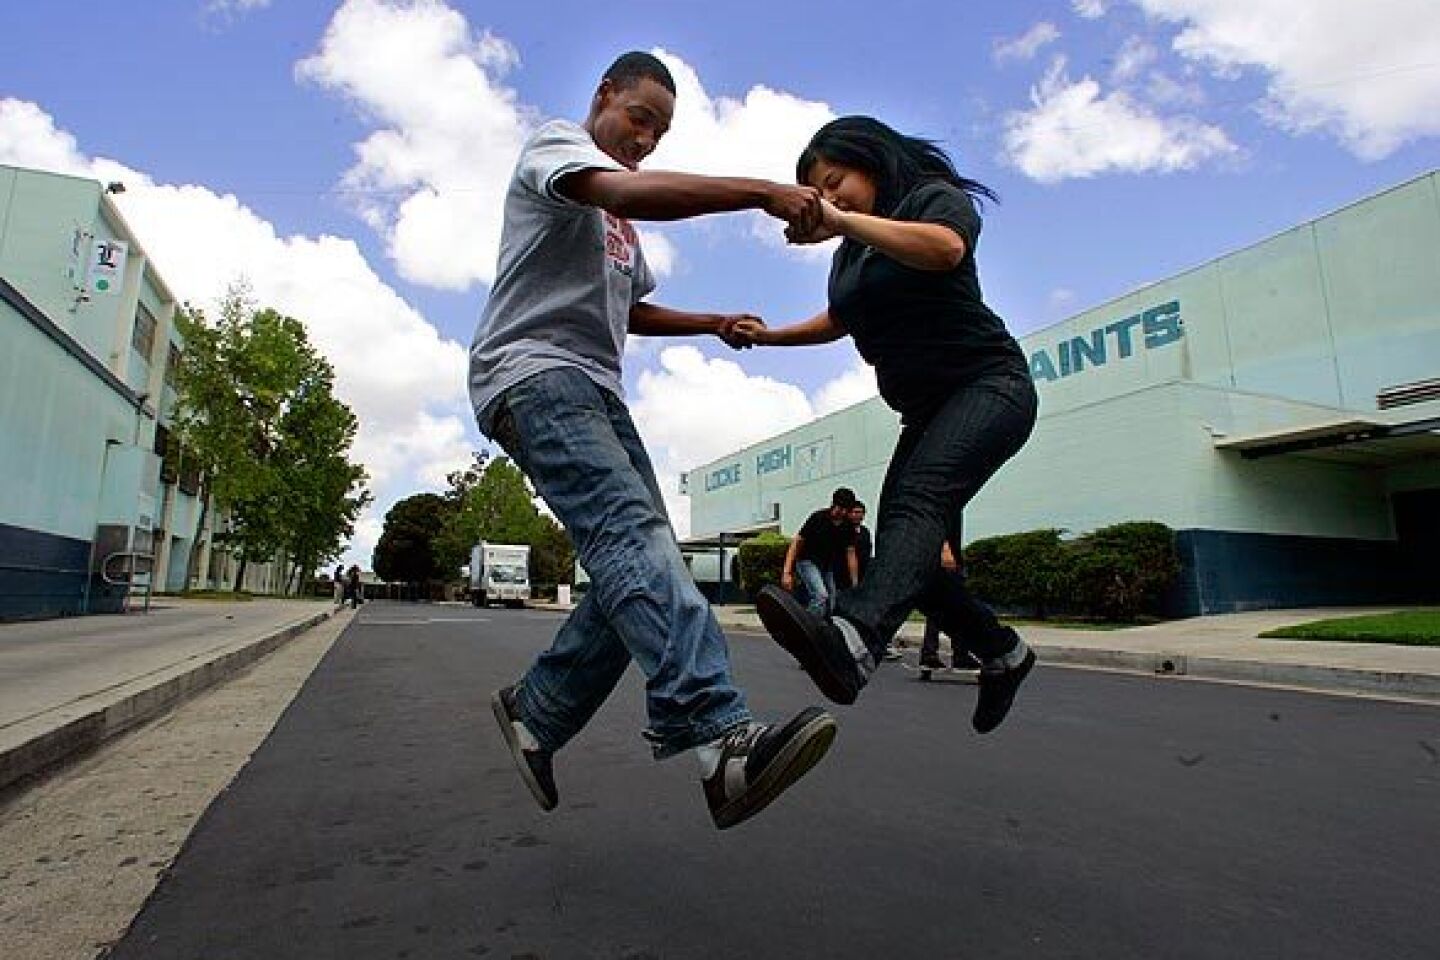 Locke High -- skateboards